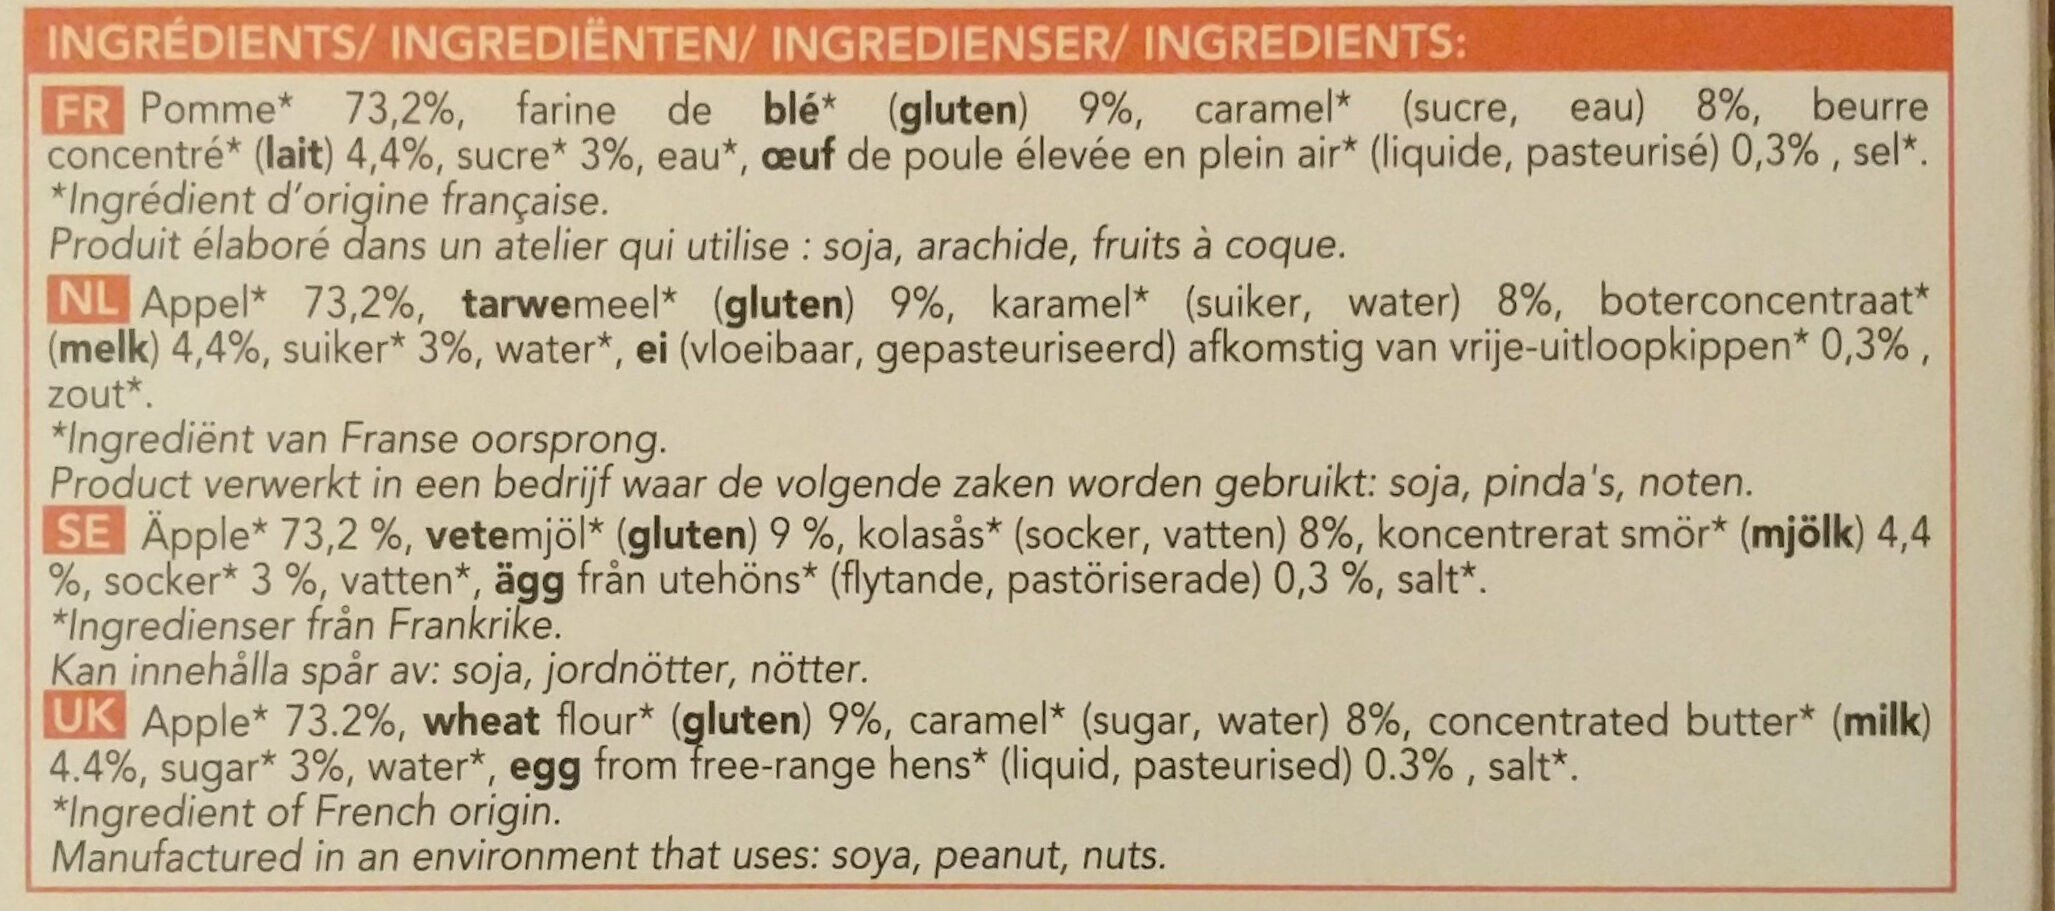 Tartelettes Tatin - Ingredients - fr